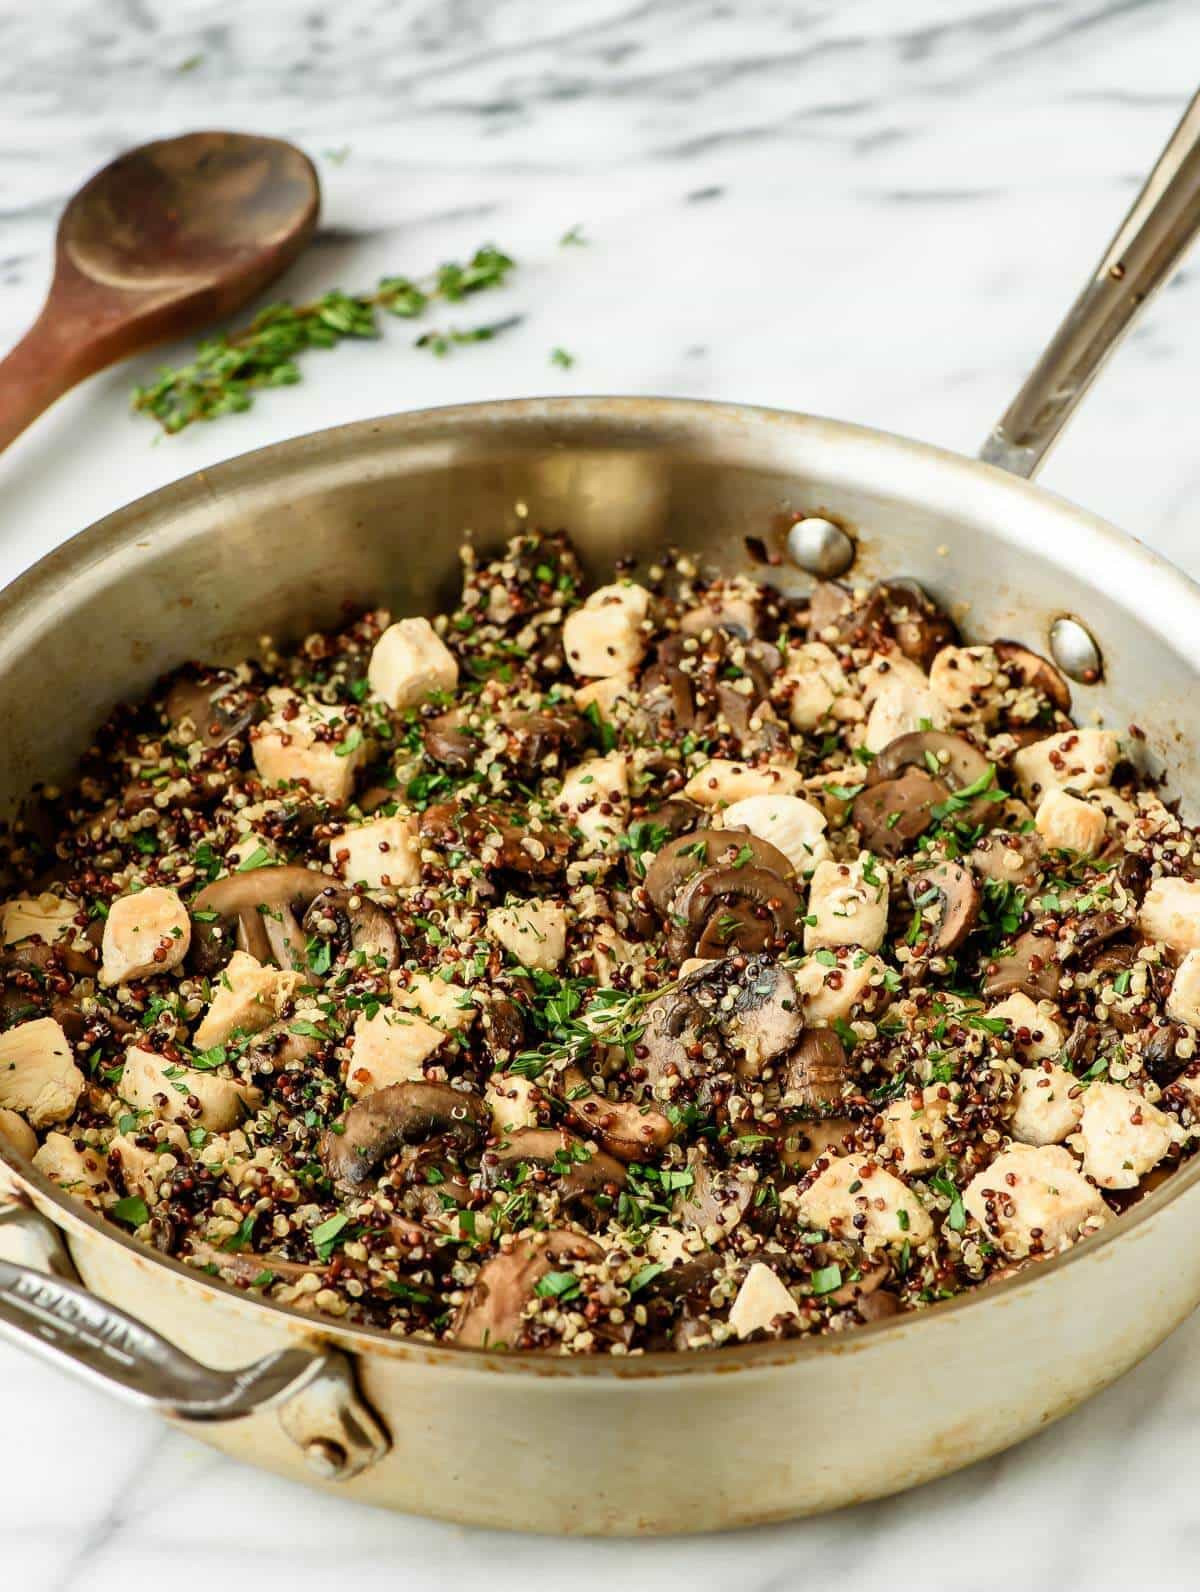 Healthy Chicken Quinoa Recipes 20 Ideas for Skillet Mushroom Chicken and Quinoa Recipe